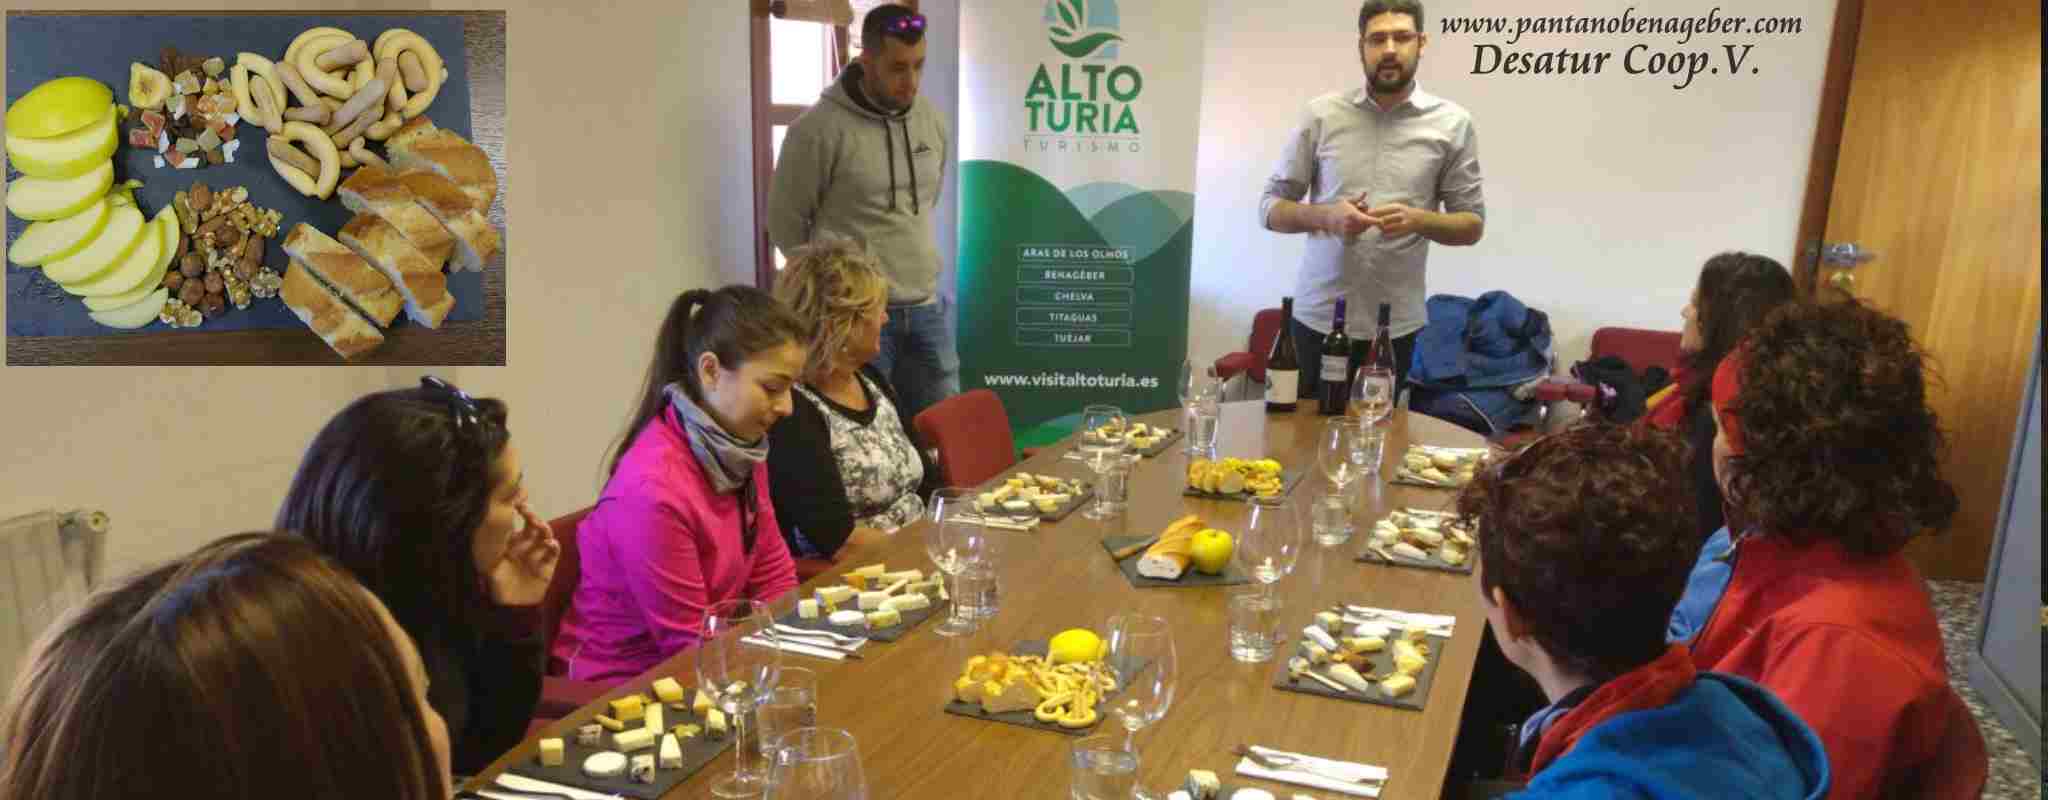 Maridaje Alto Turia: Gastronomia y Naturaleza